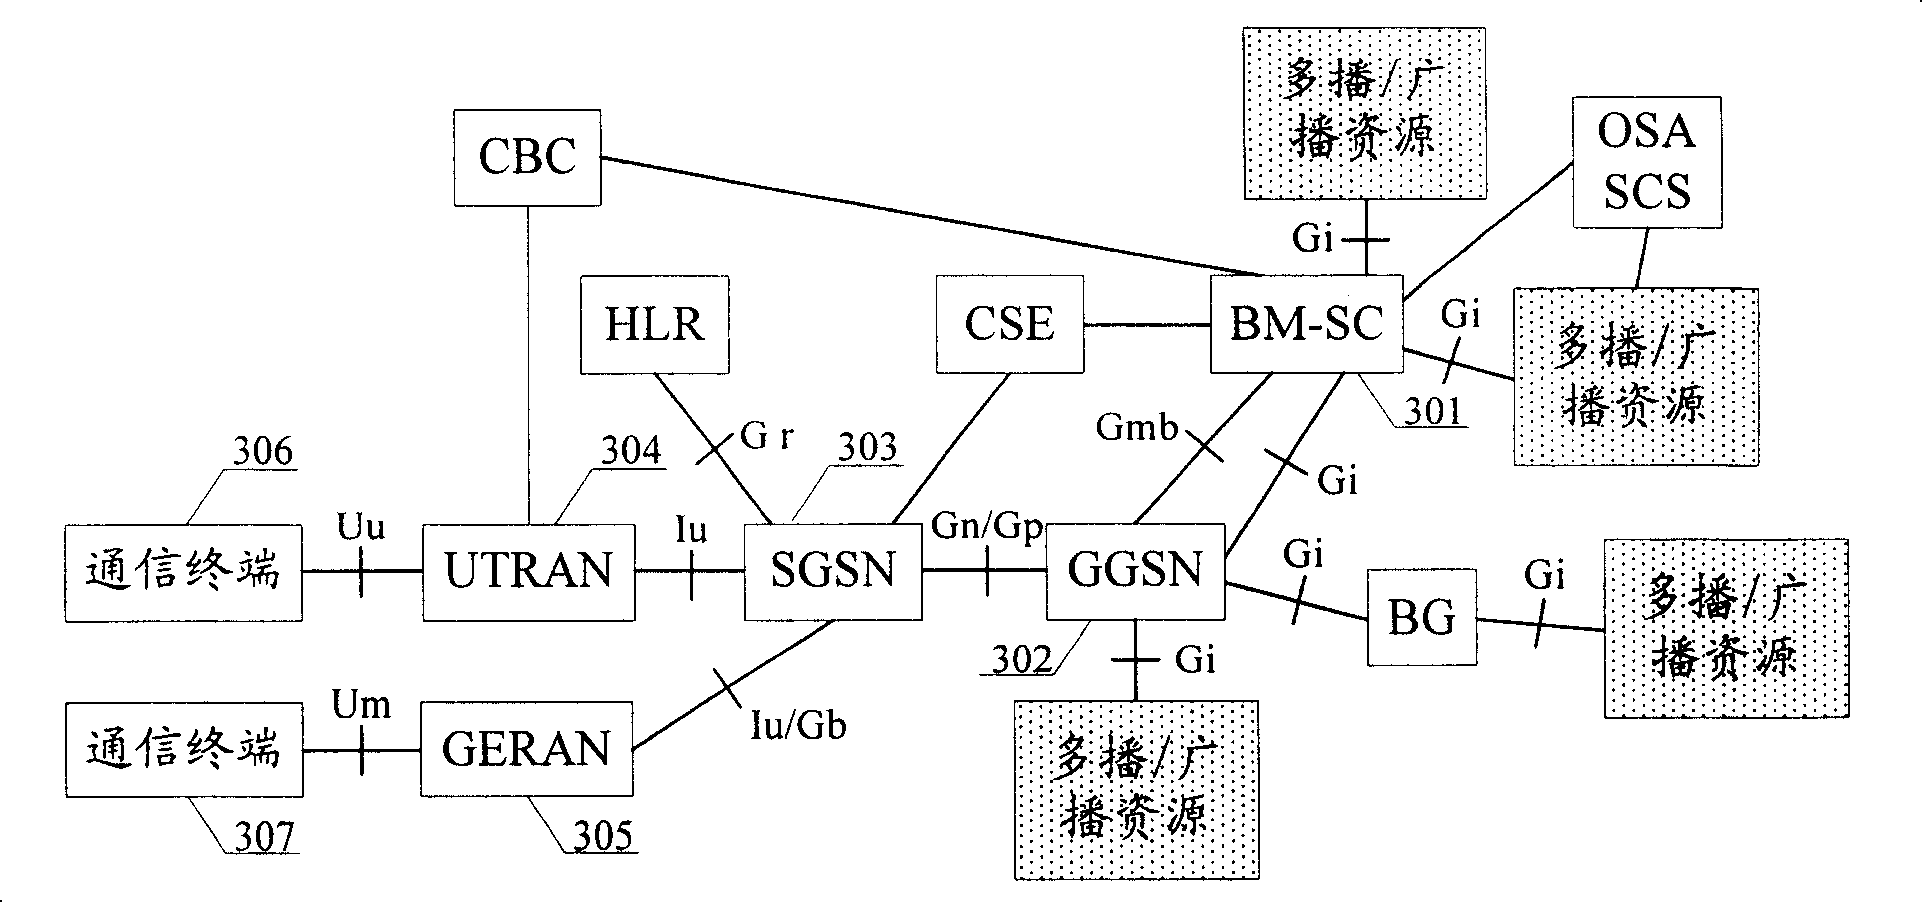 Transmission method for conversation data in group broad cast / broadcast service